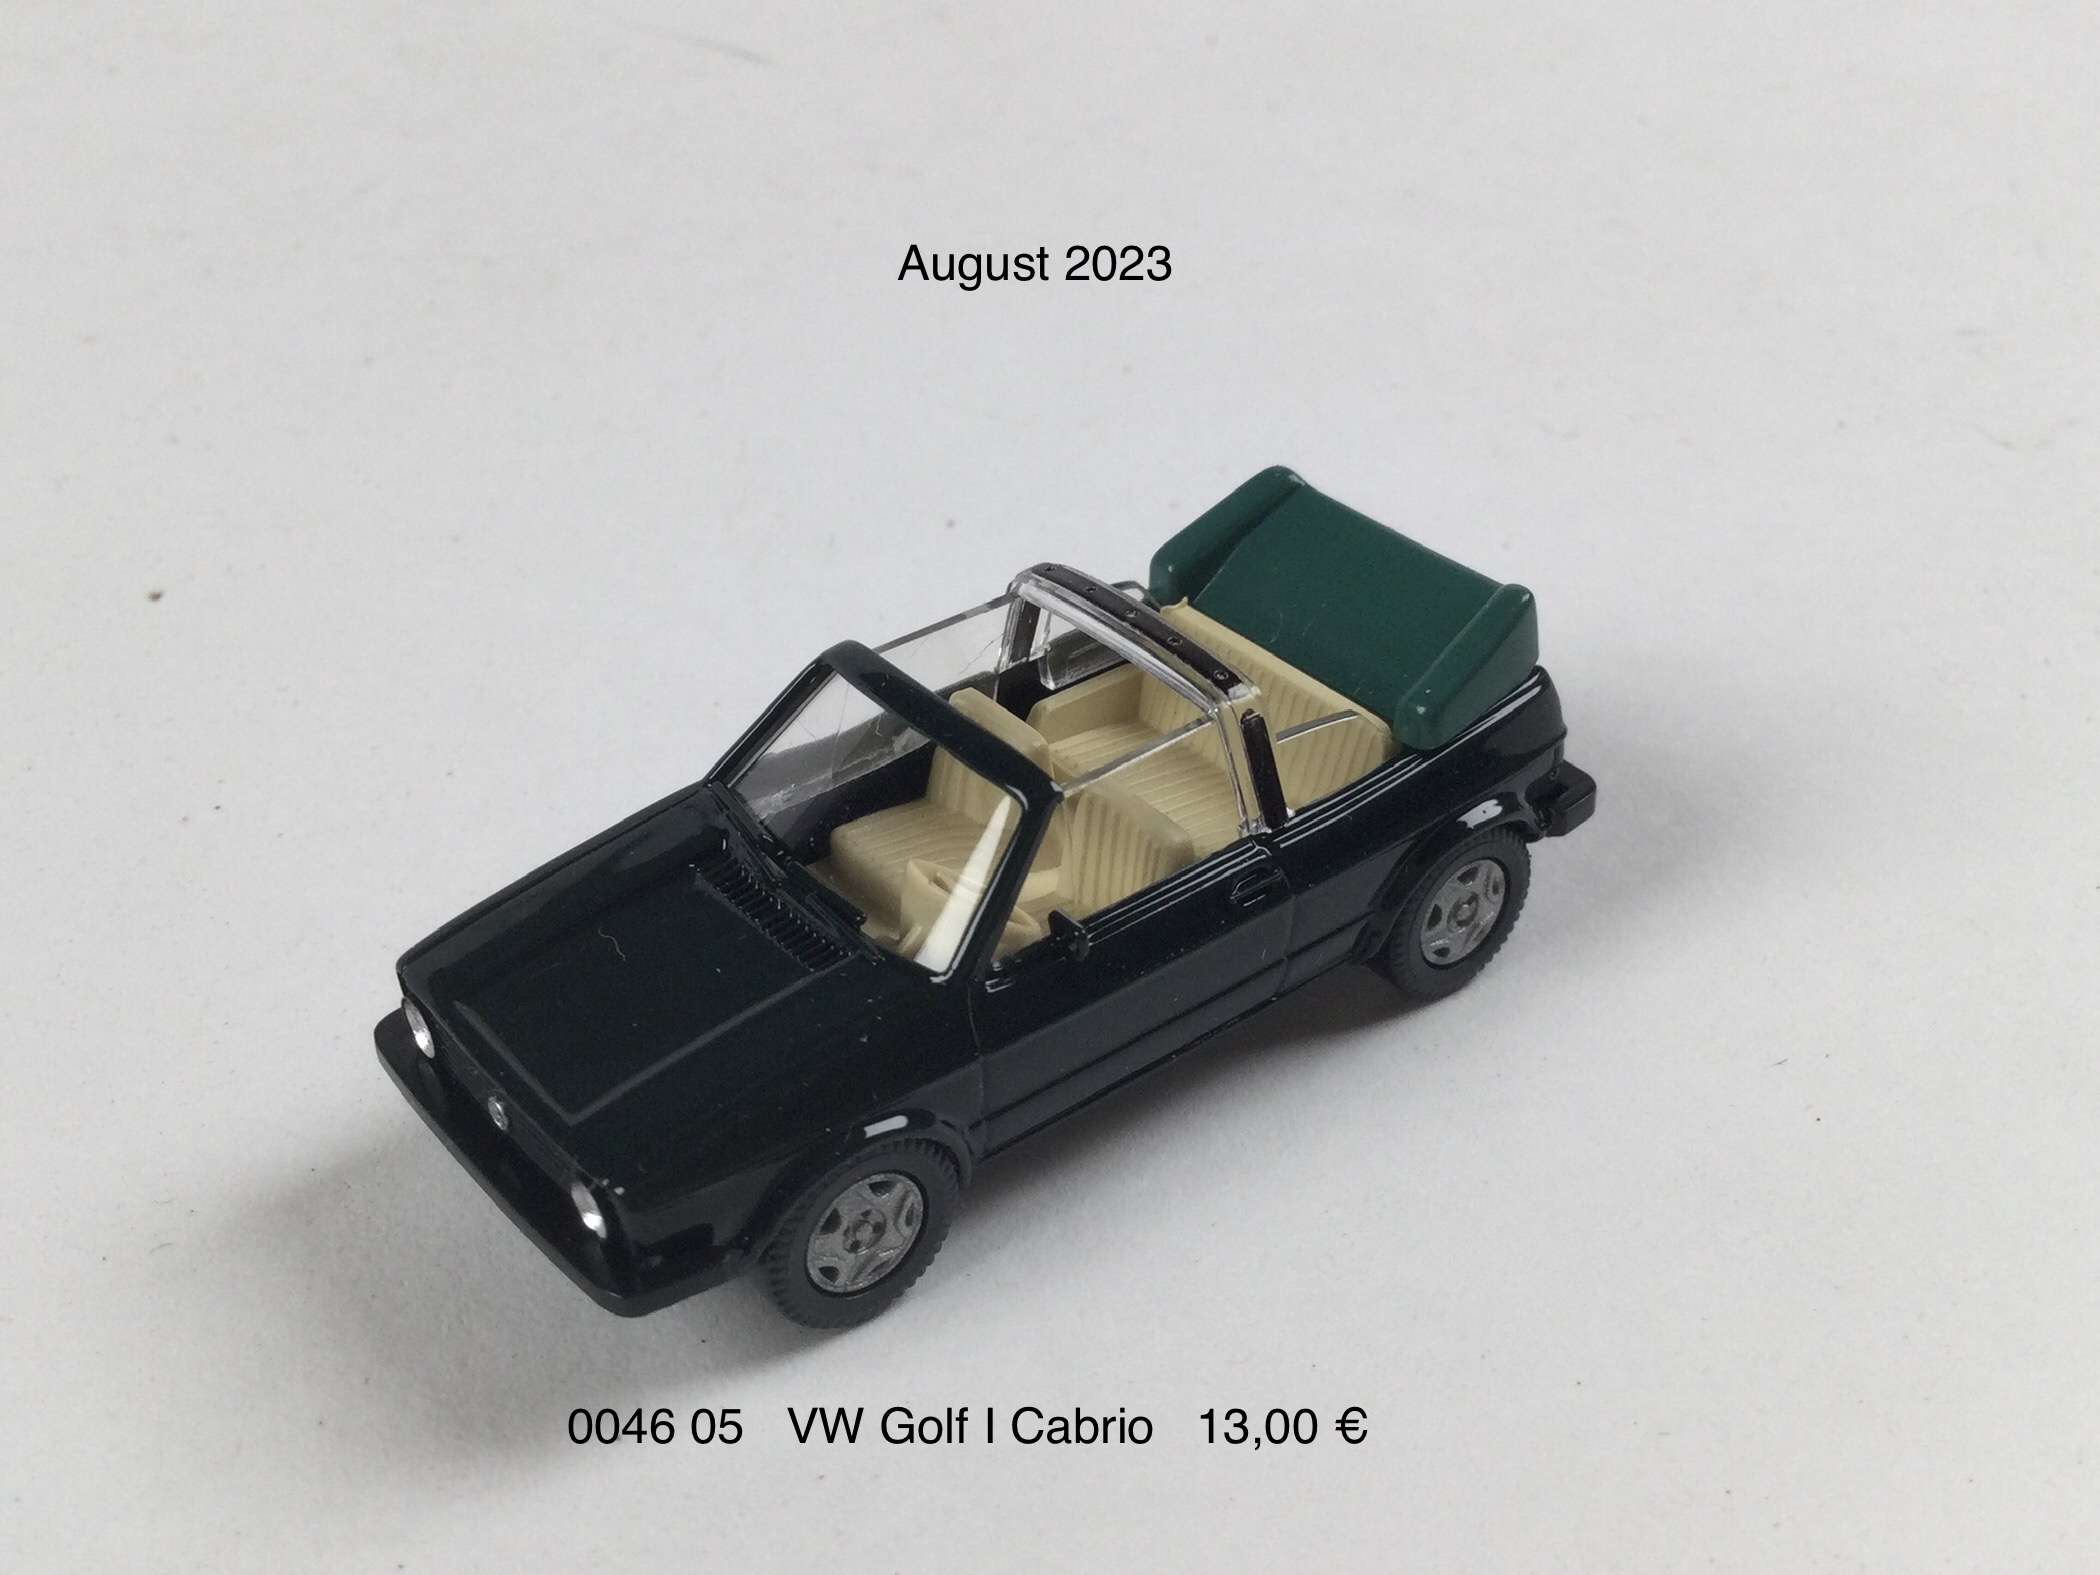 VW Golf l Cabrio "dunkelgrün"